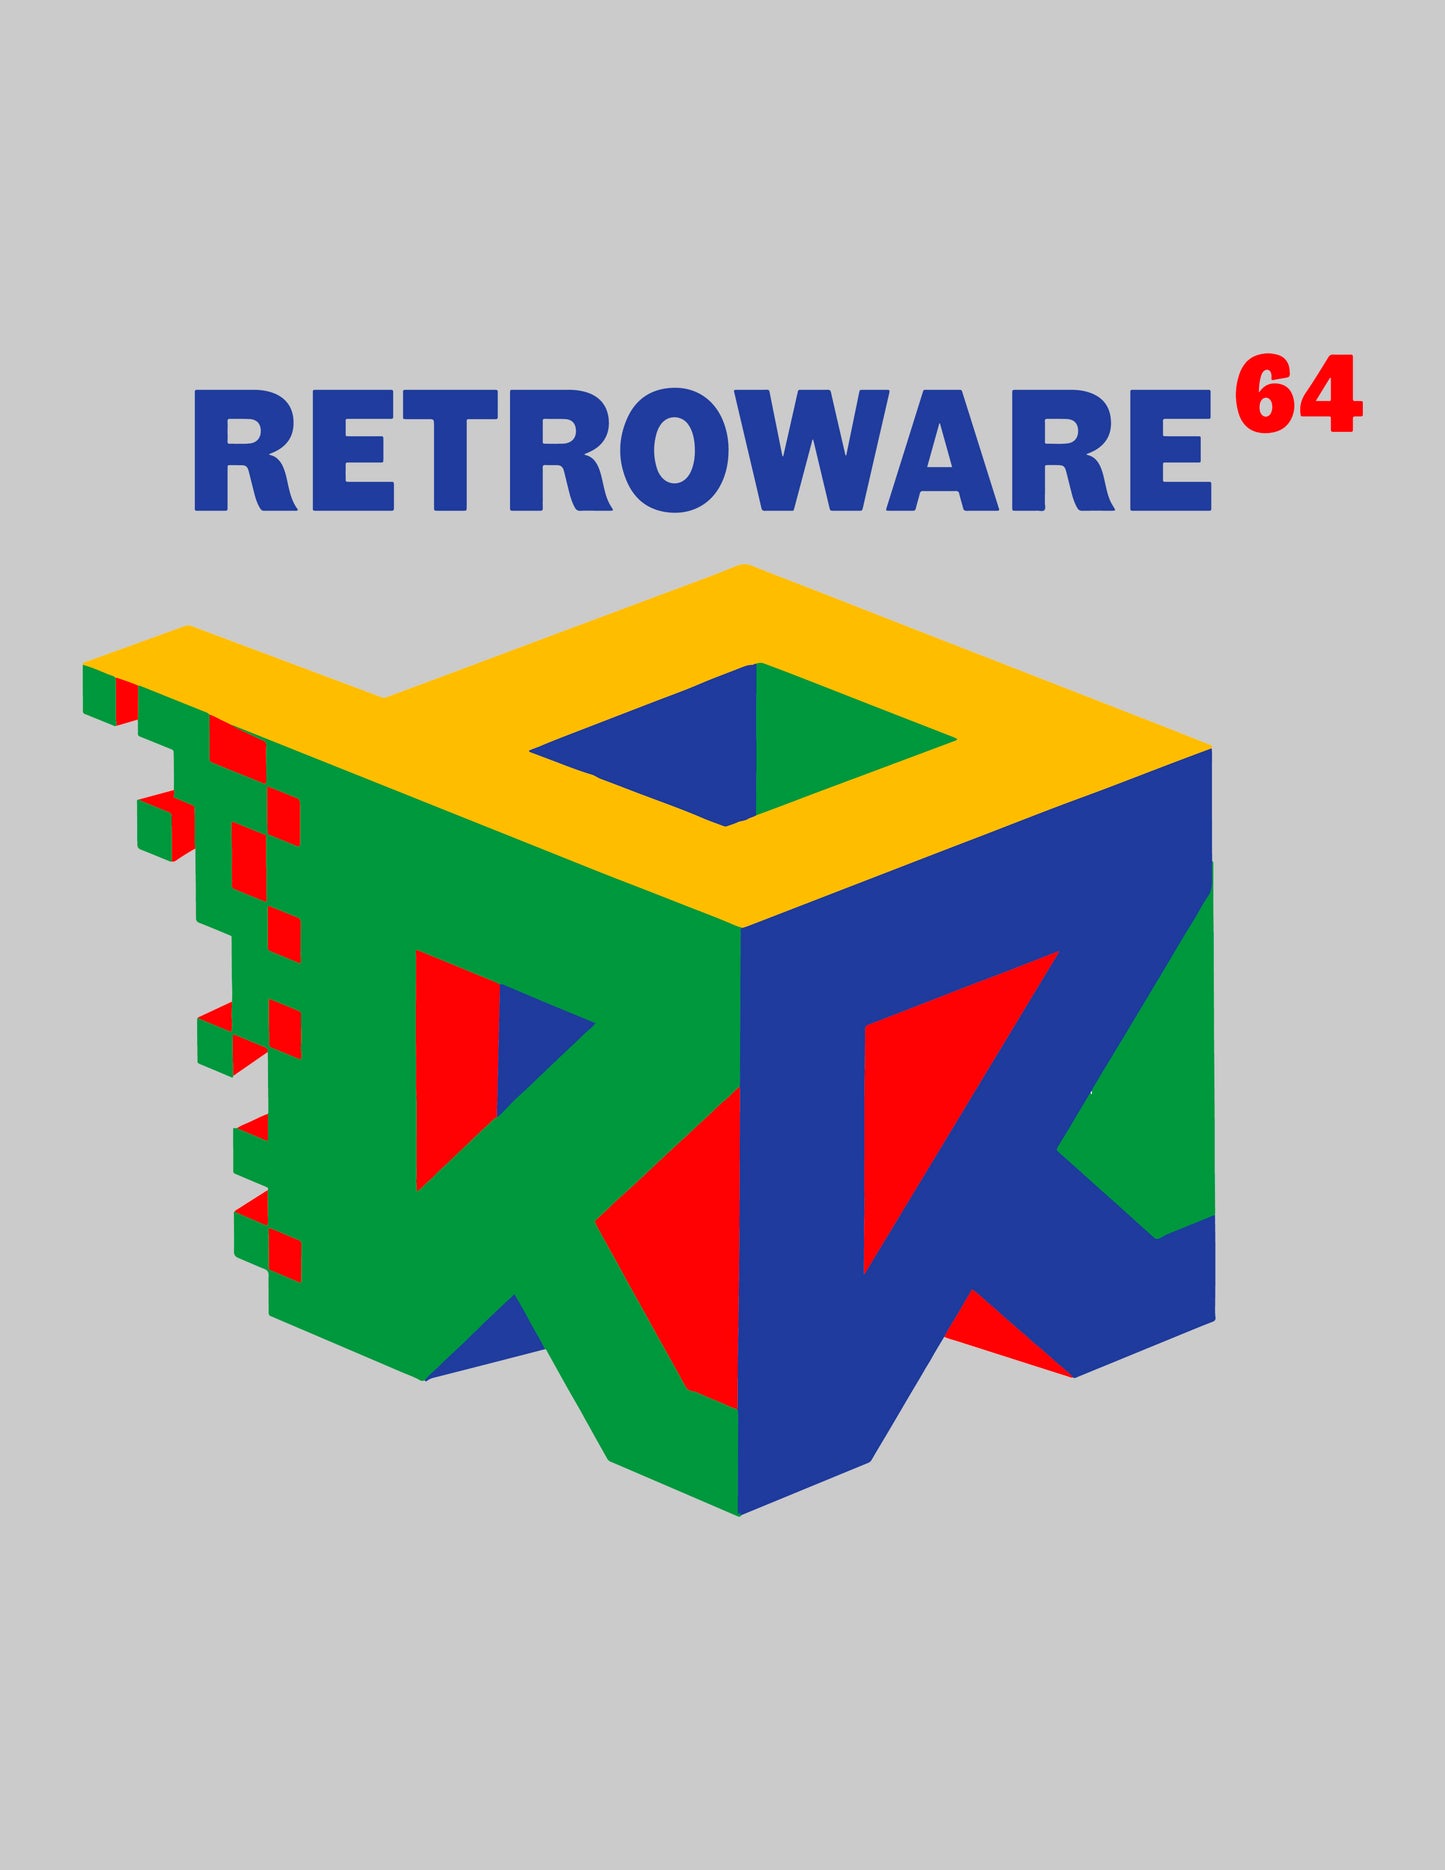 Retroware 64 Premium T-Shirt